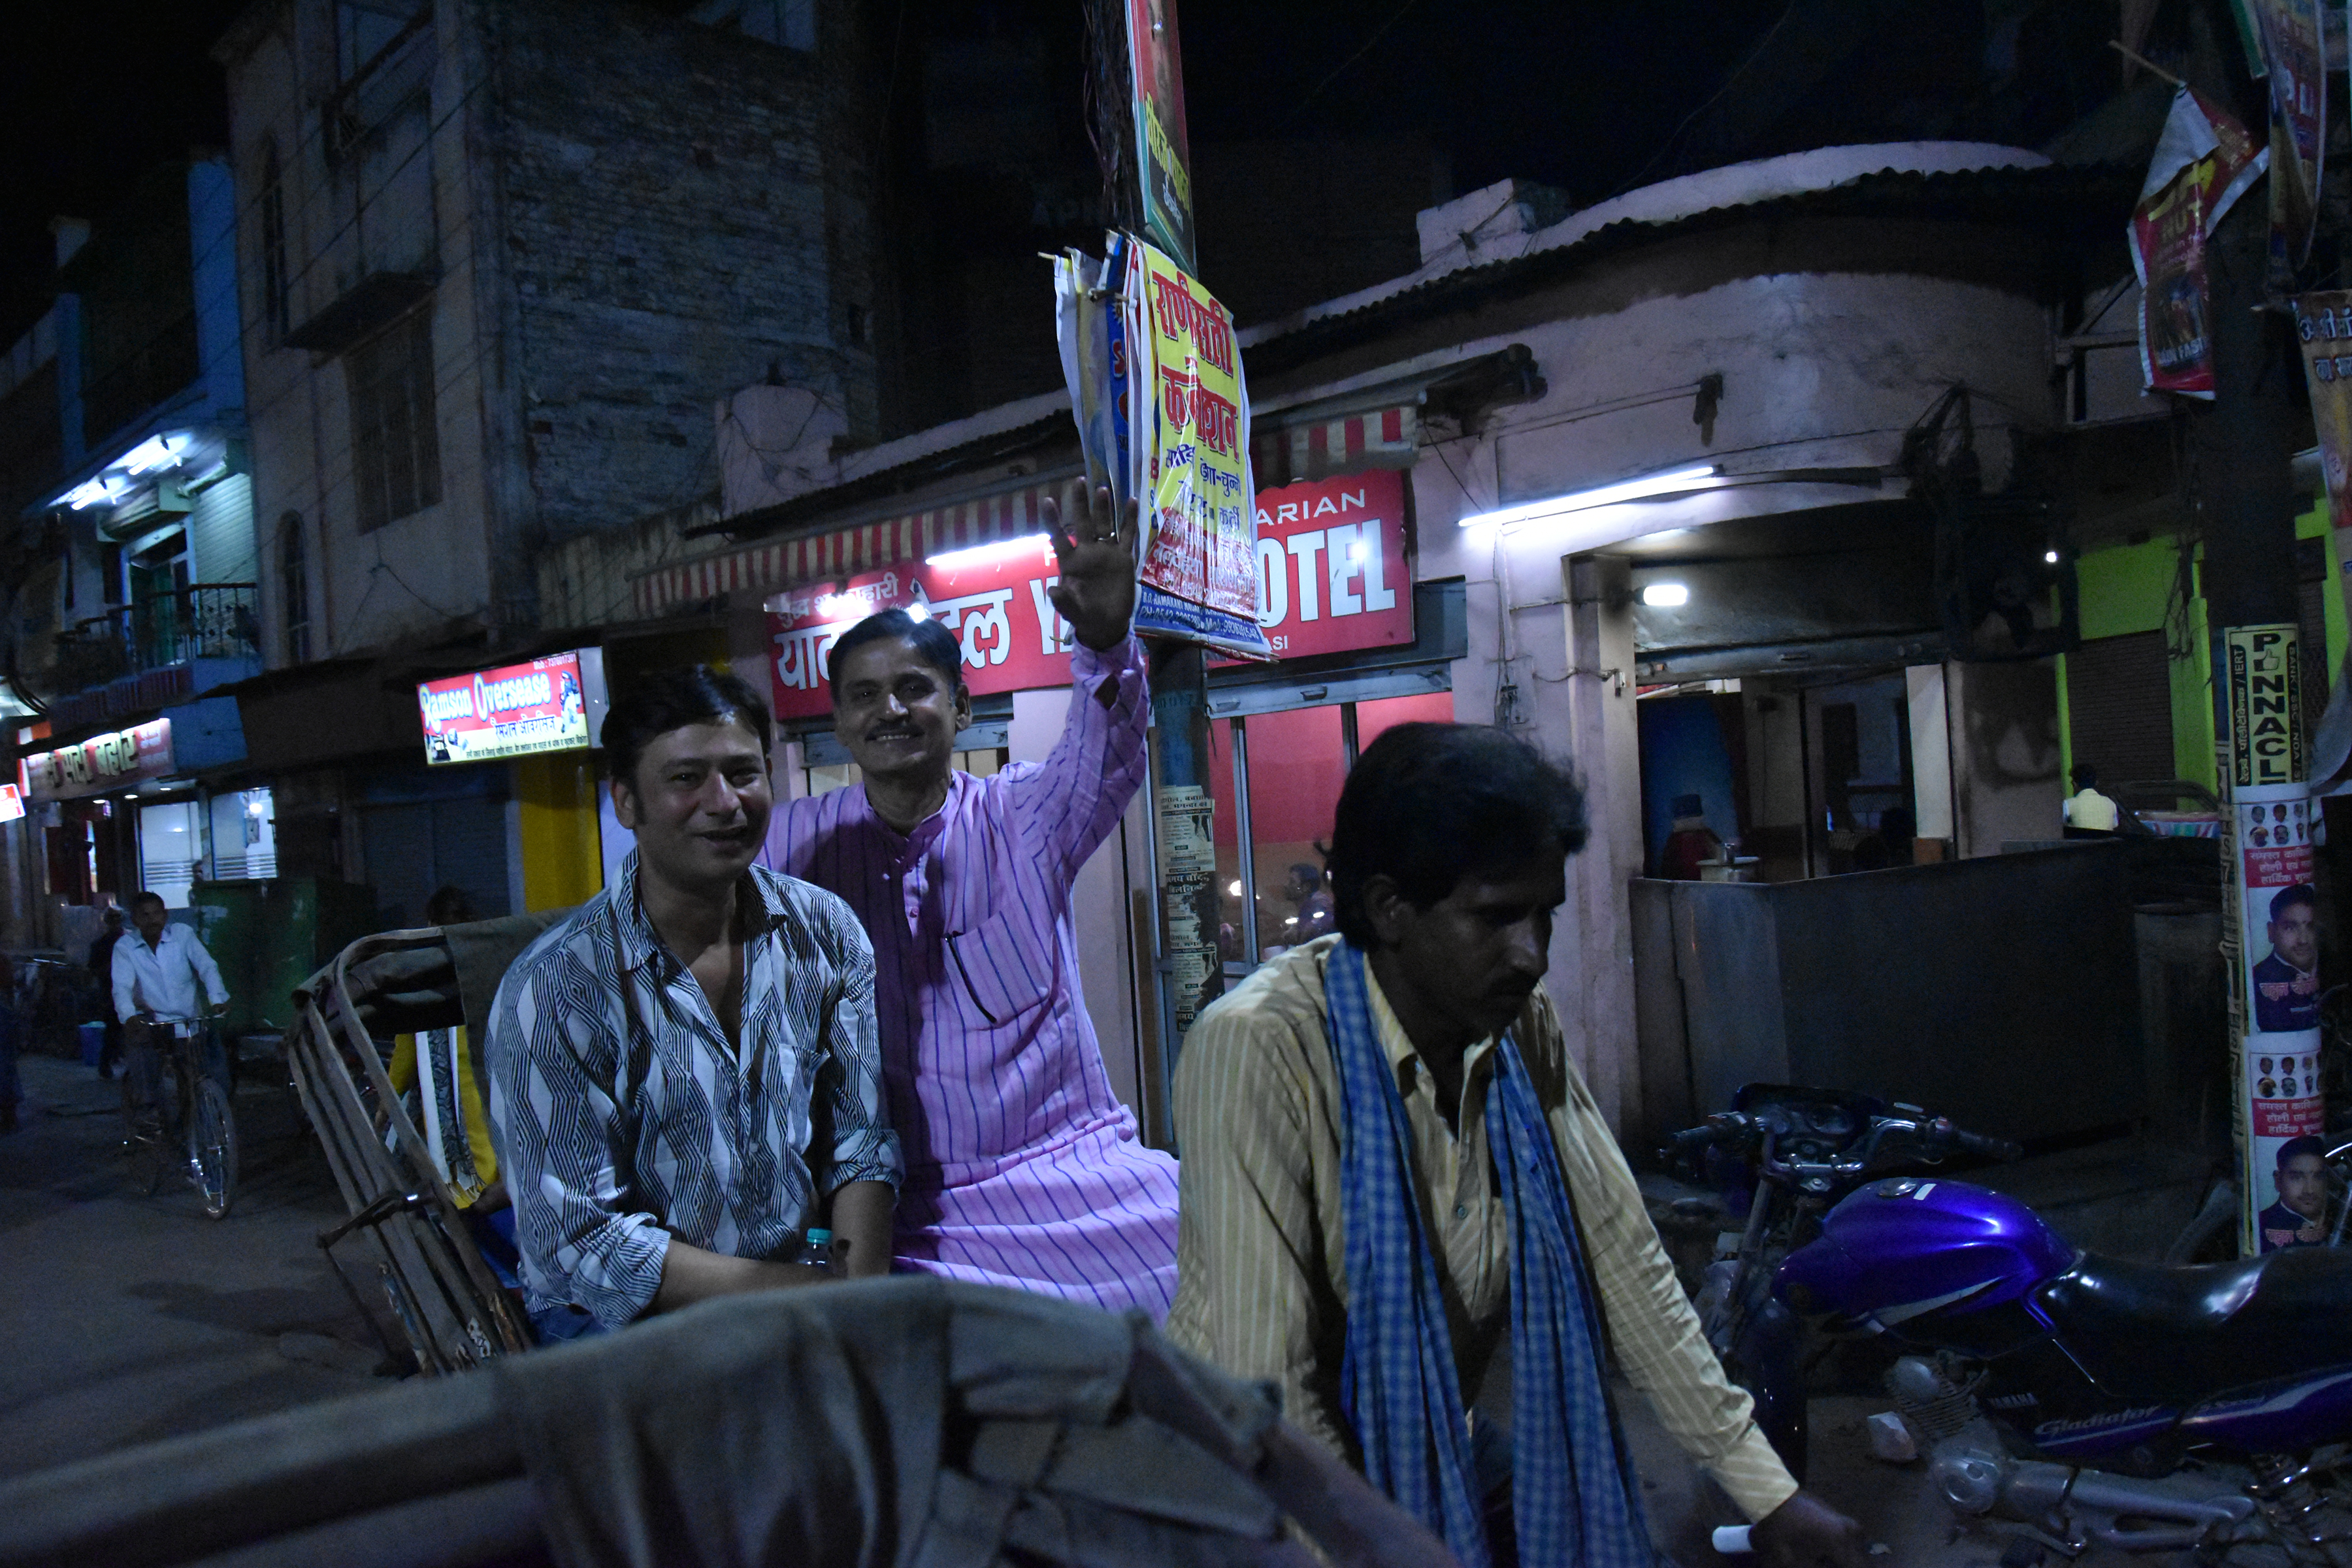   rickshaw ride back from river - Anwar with Krishna